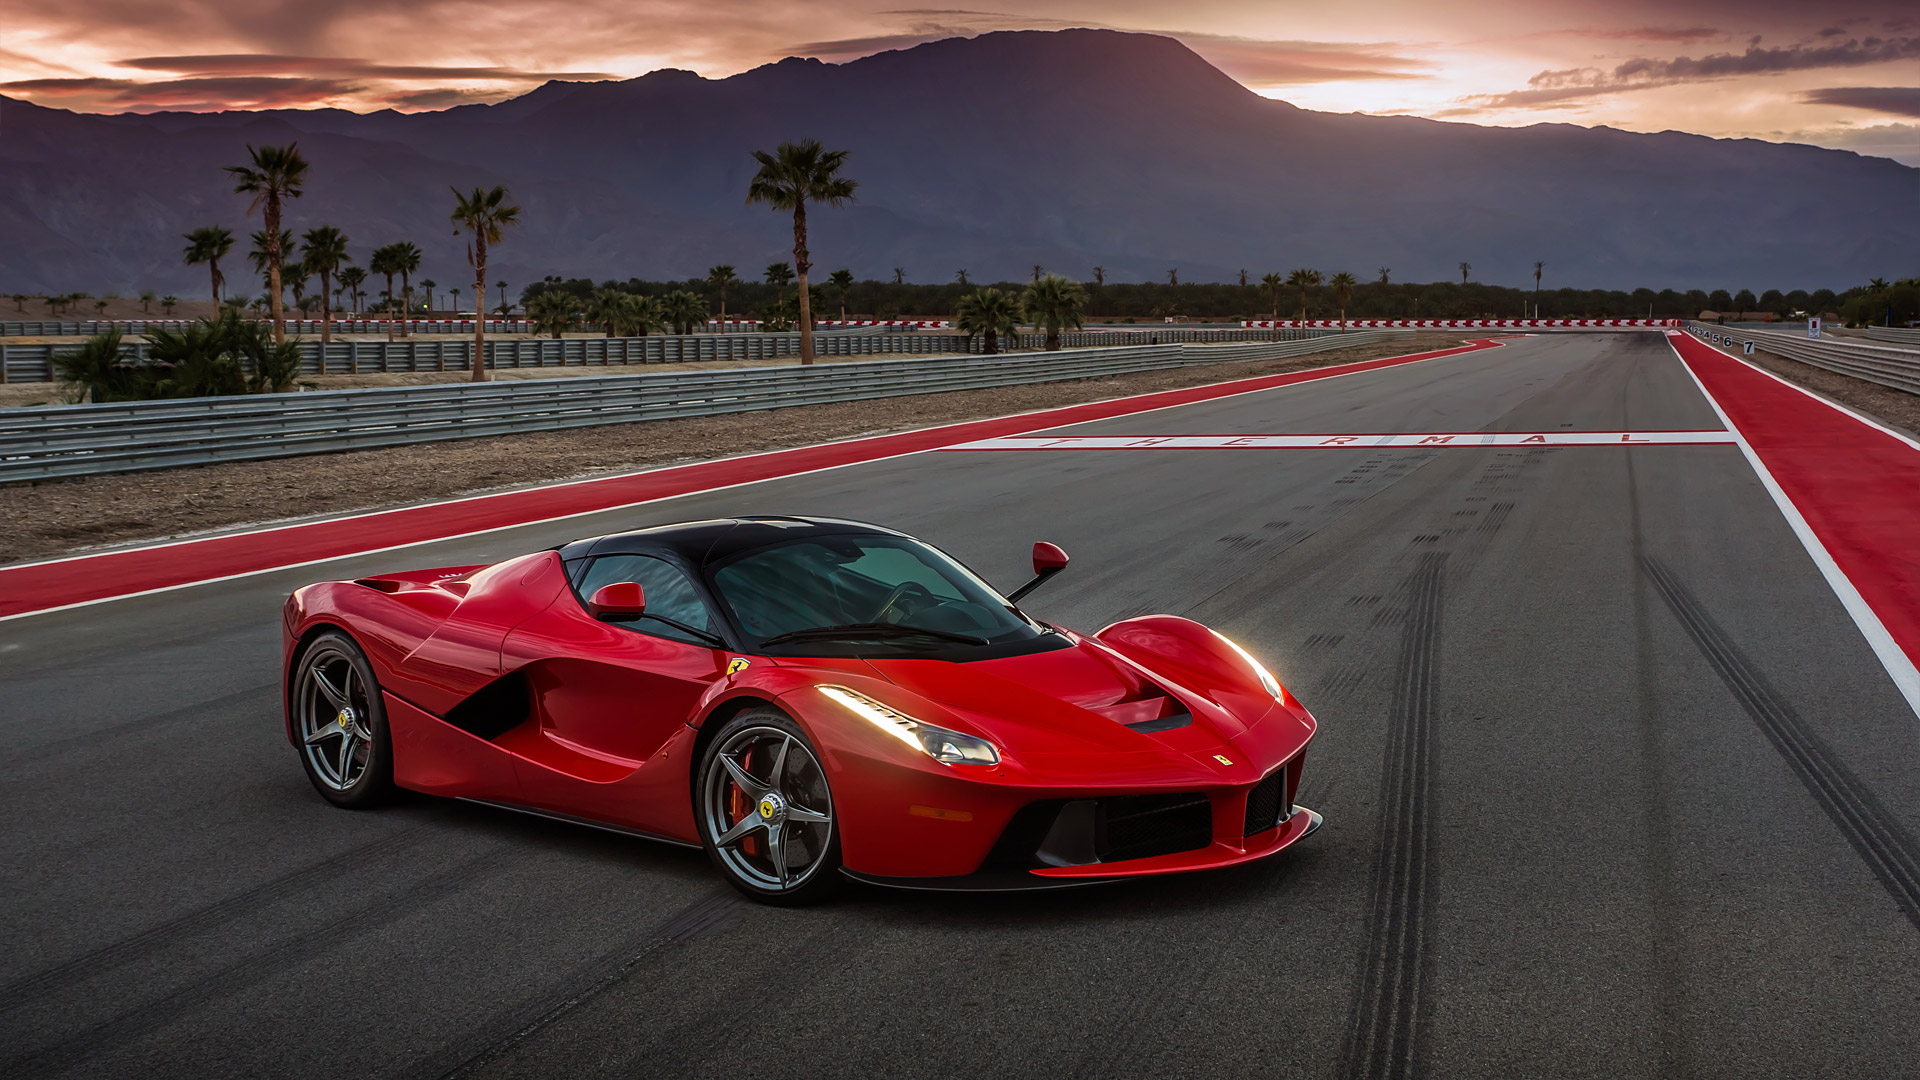 2014 Ferrari Laferrari Picture - Ferrari Laferrari 4k , HD Wallpaper & Backgrounds